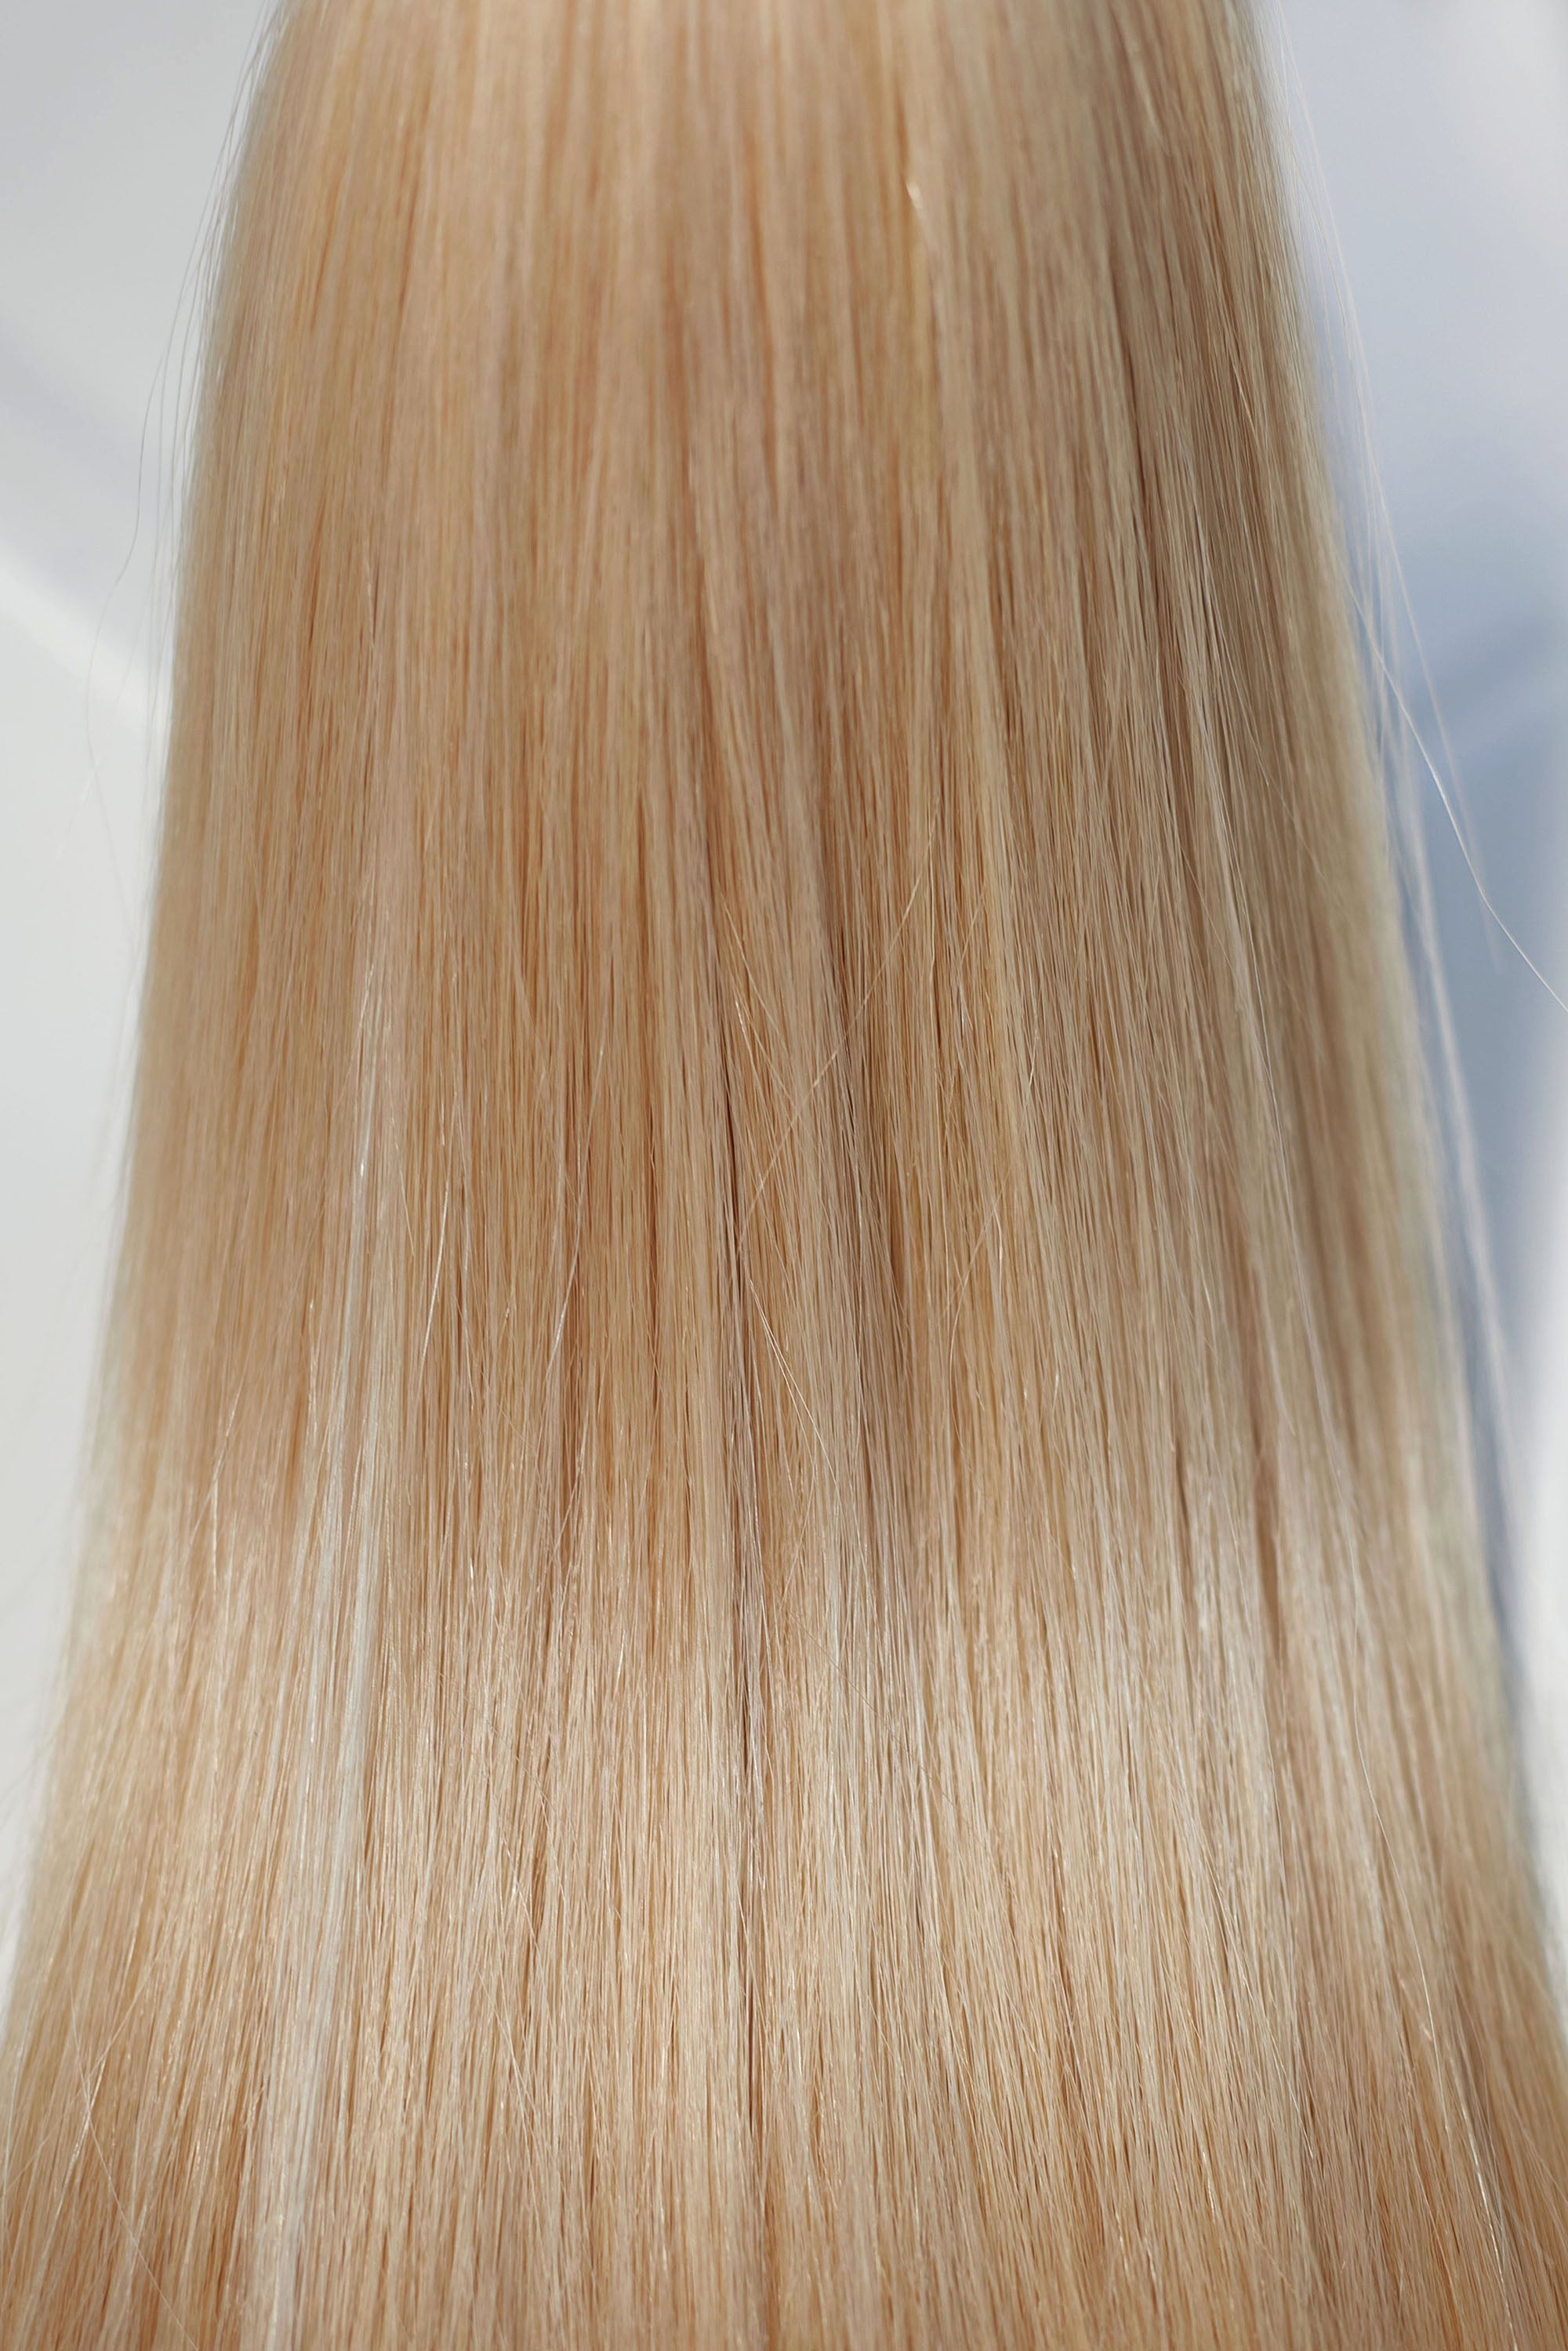 Behair professional Keratin Tip "Premium" 26" (65cm) Natural Straight Light Gold Blond #24 - 25g (Micro - 0.5g each pcs) hair extensions